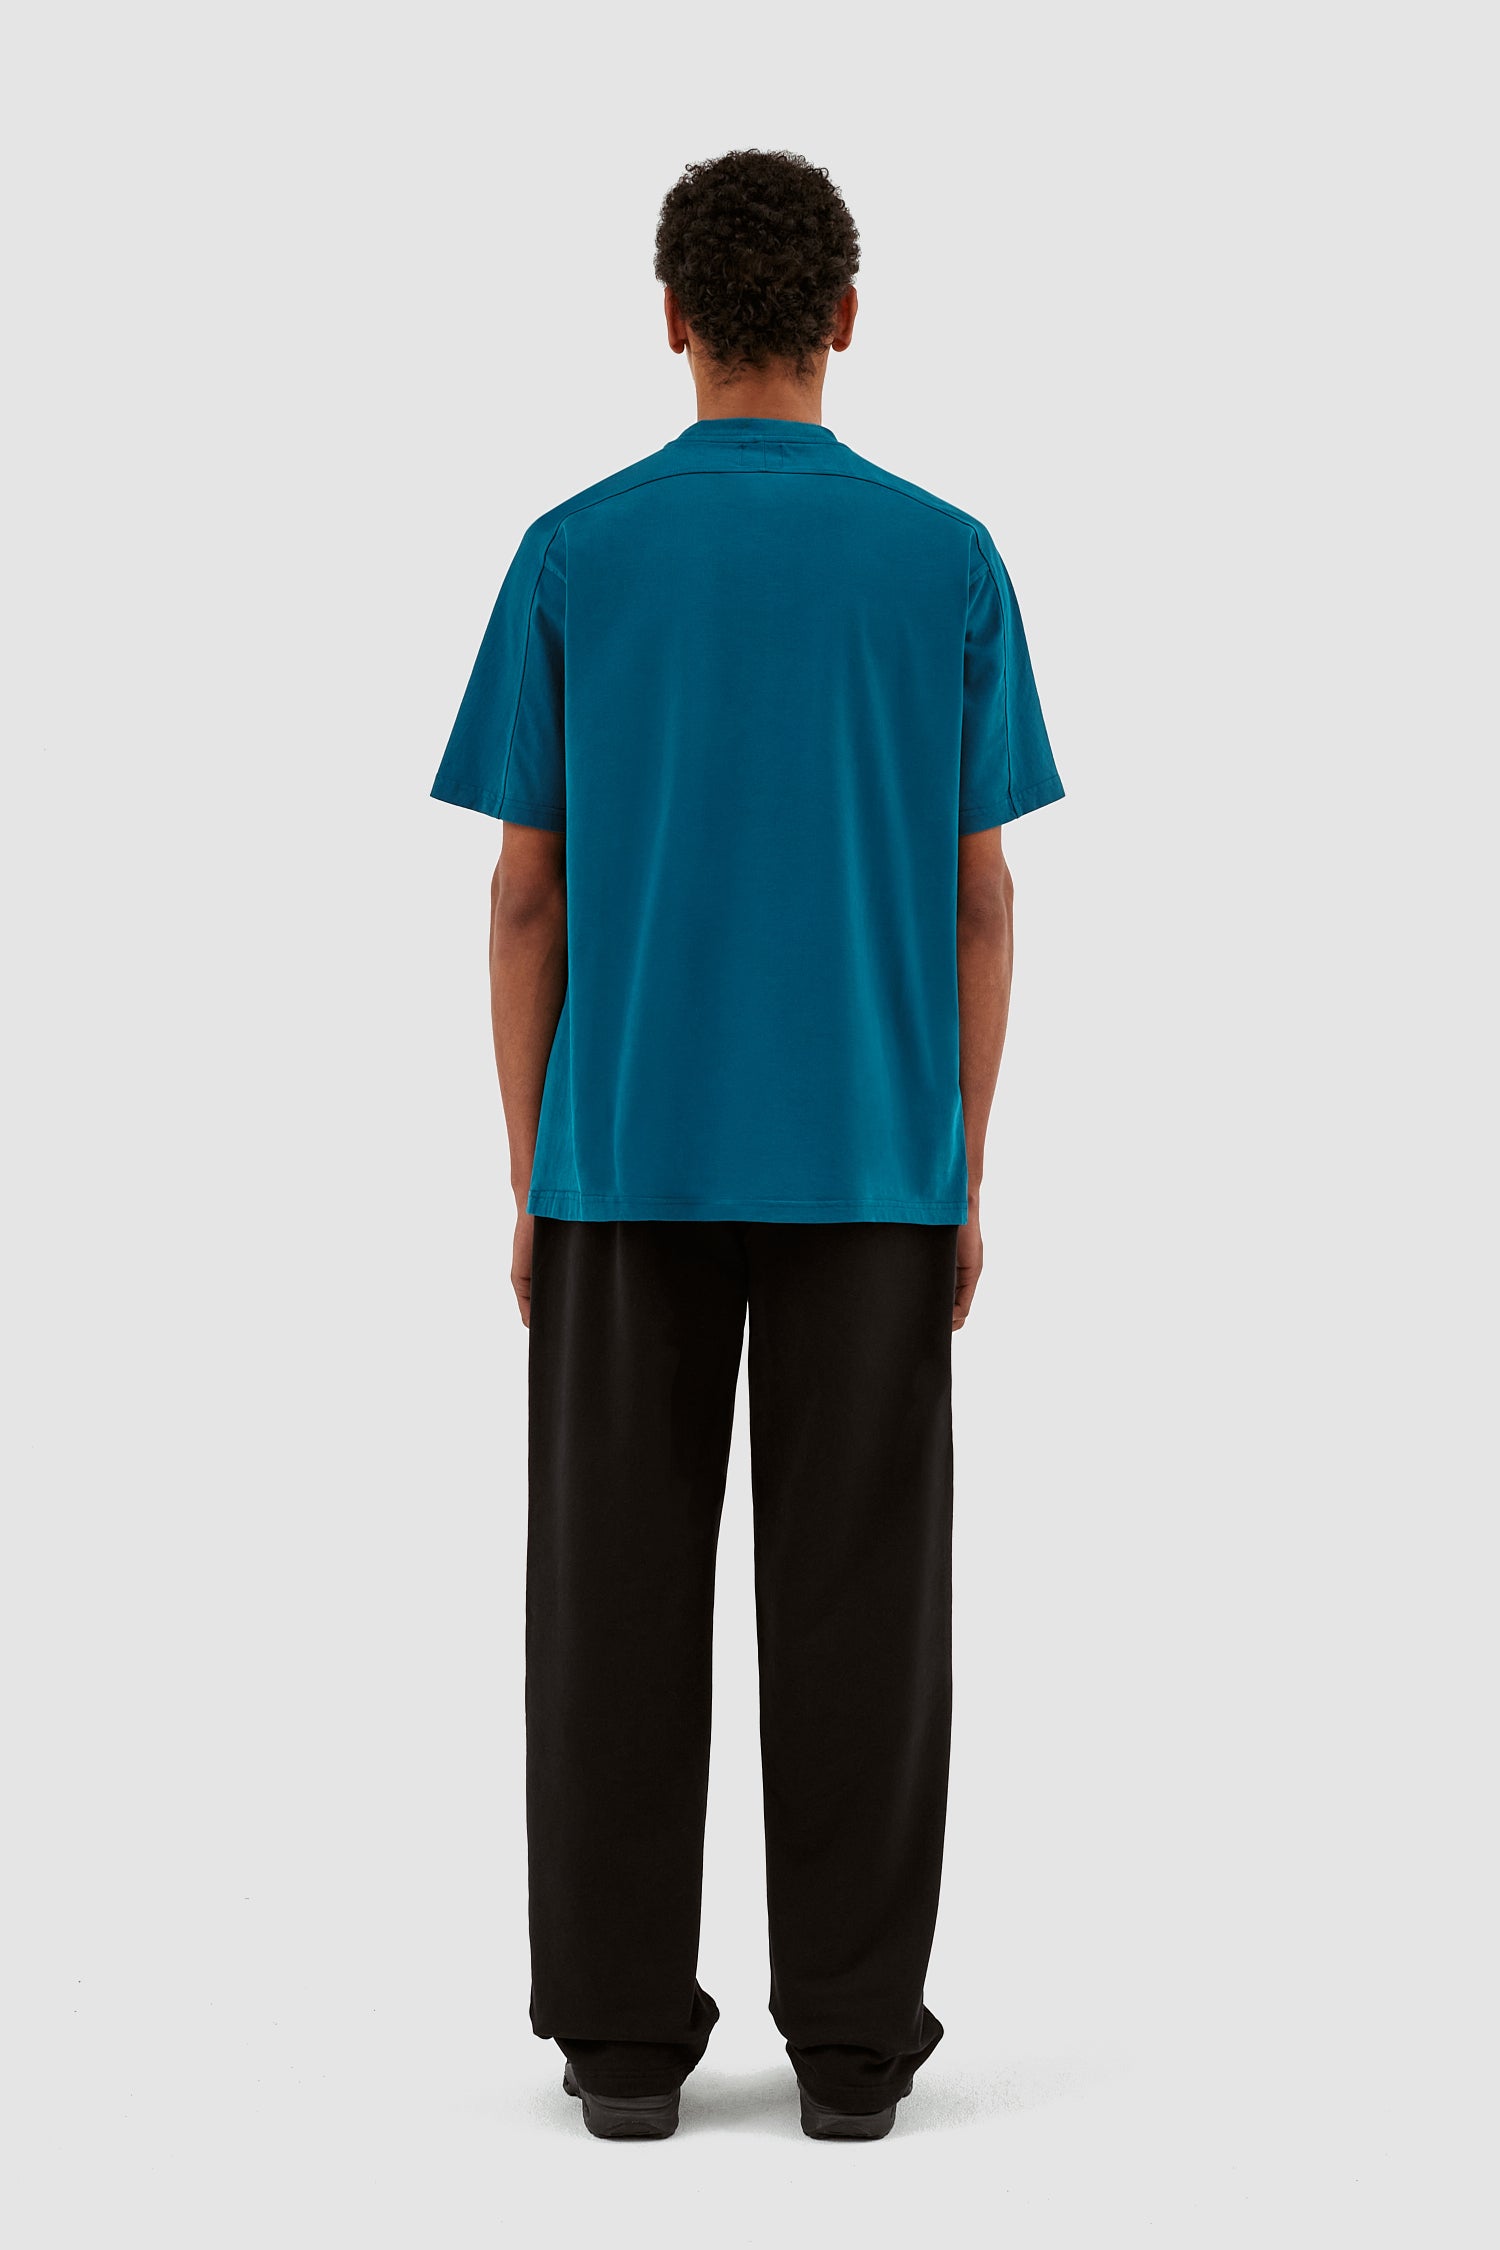 Theo S Cuts T-shirt - Lagoon Blue